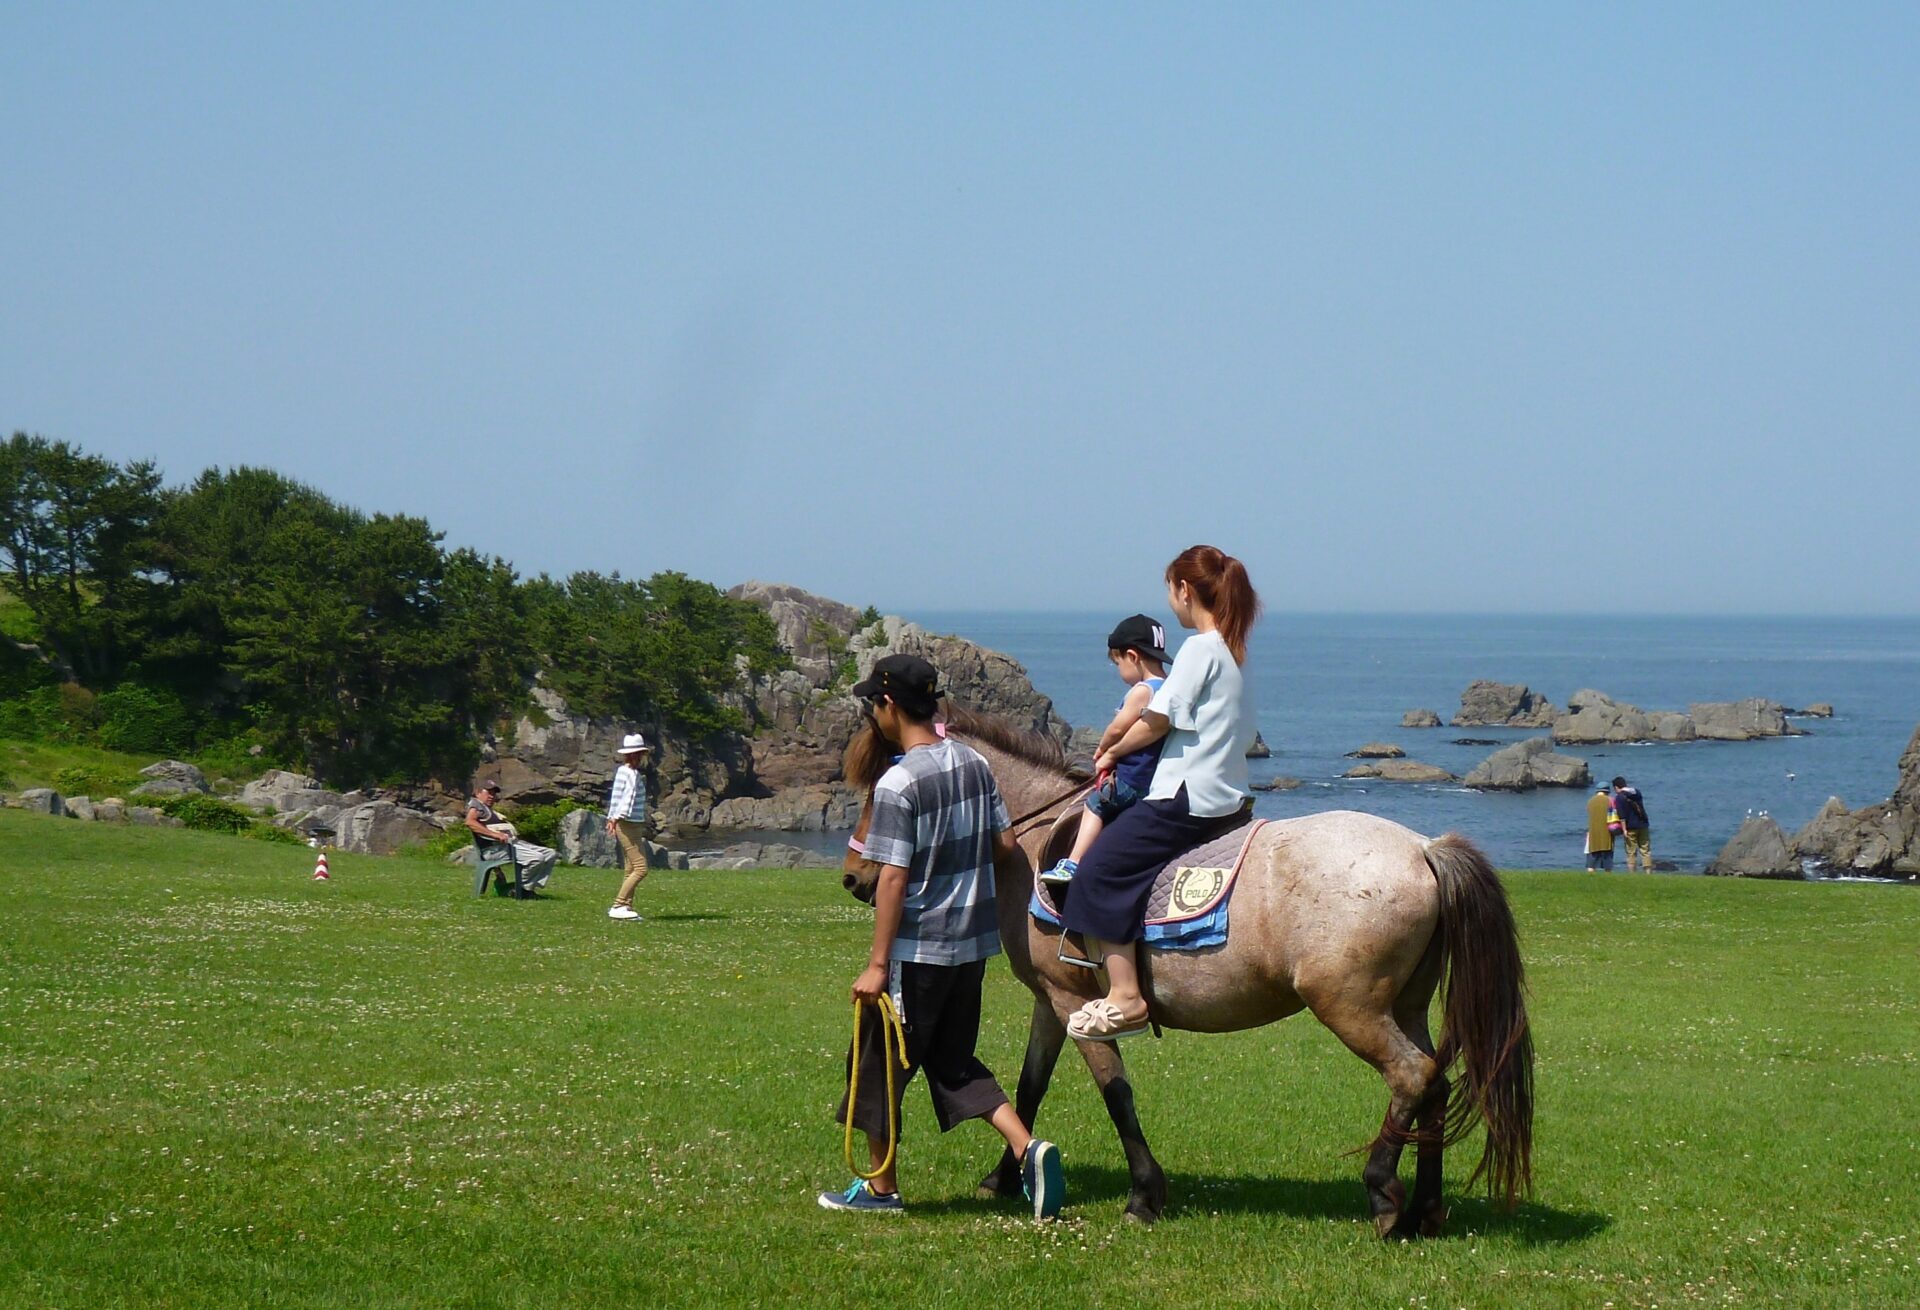 Tanabu Coast Natural Lawn Area Activities to Enjoy Around the Tanesashi Coast!